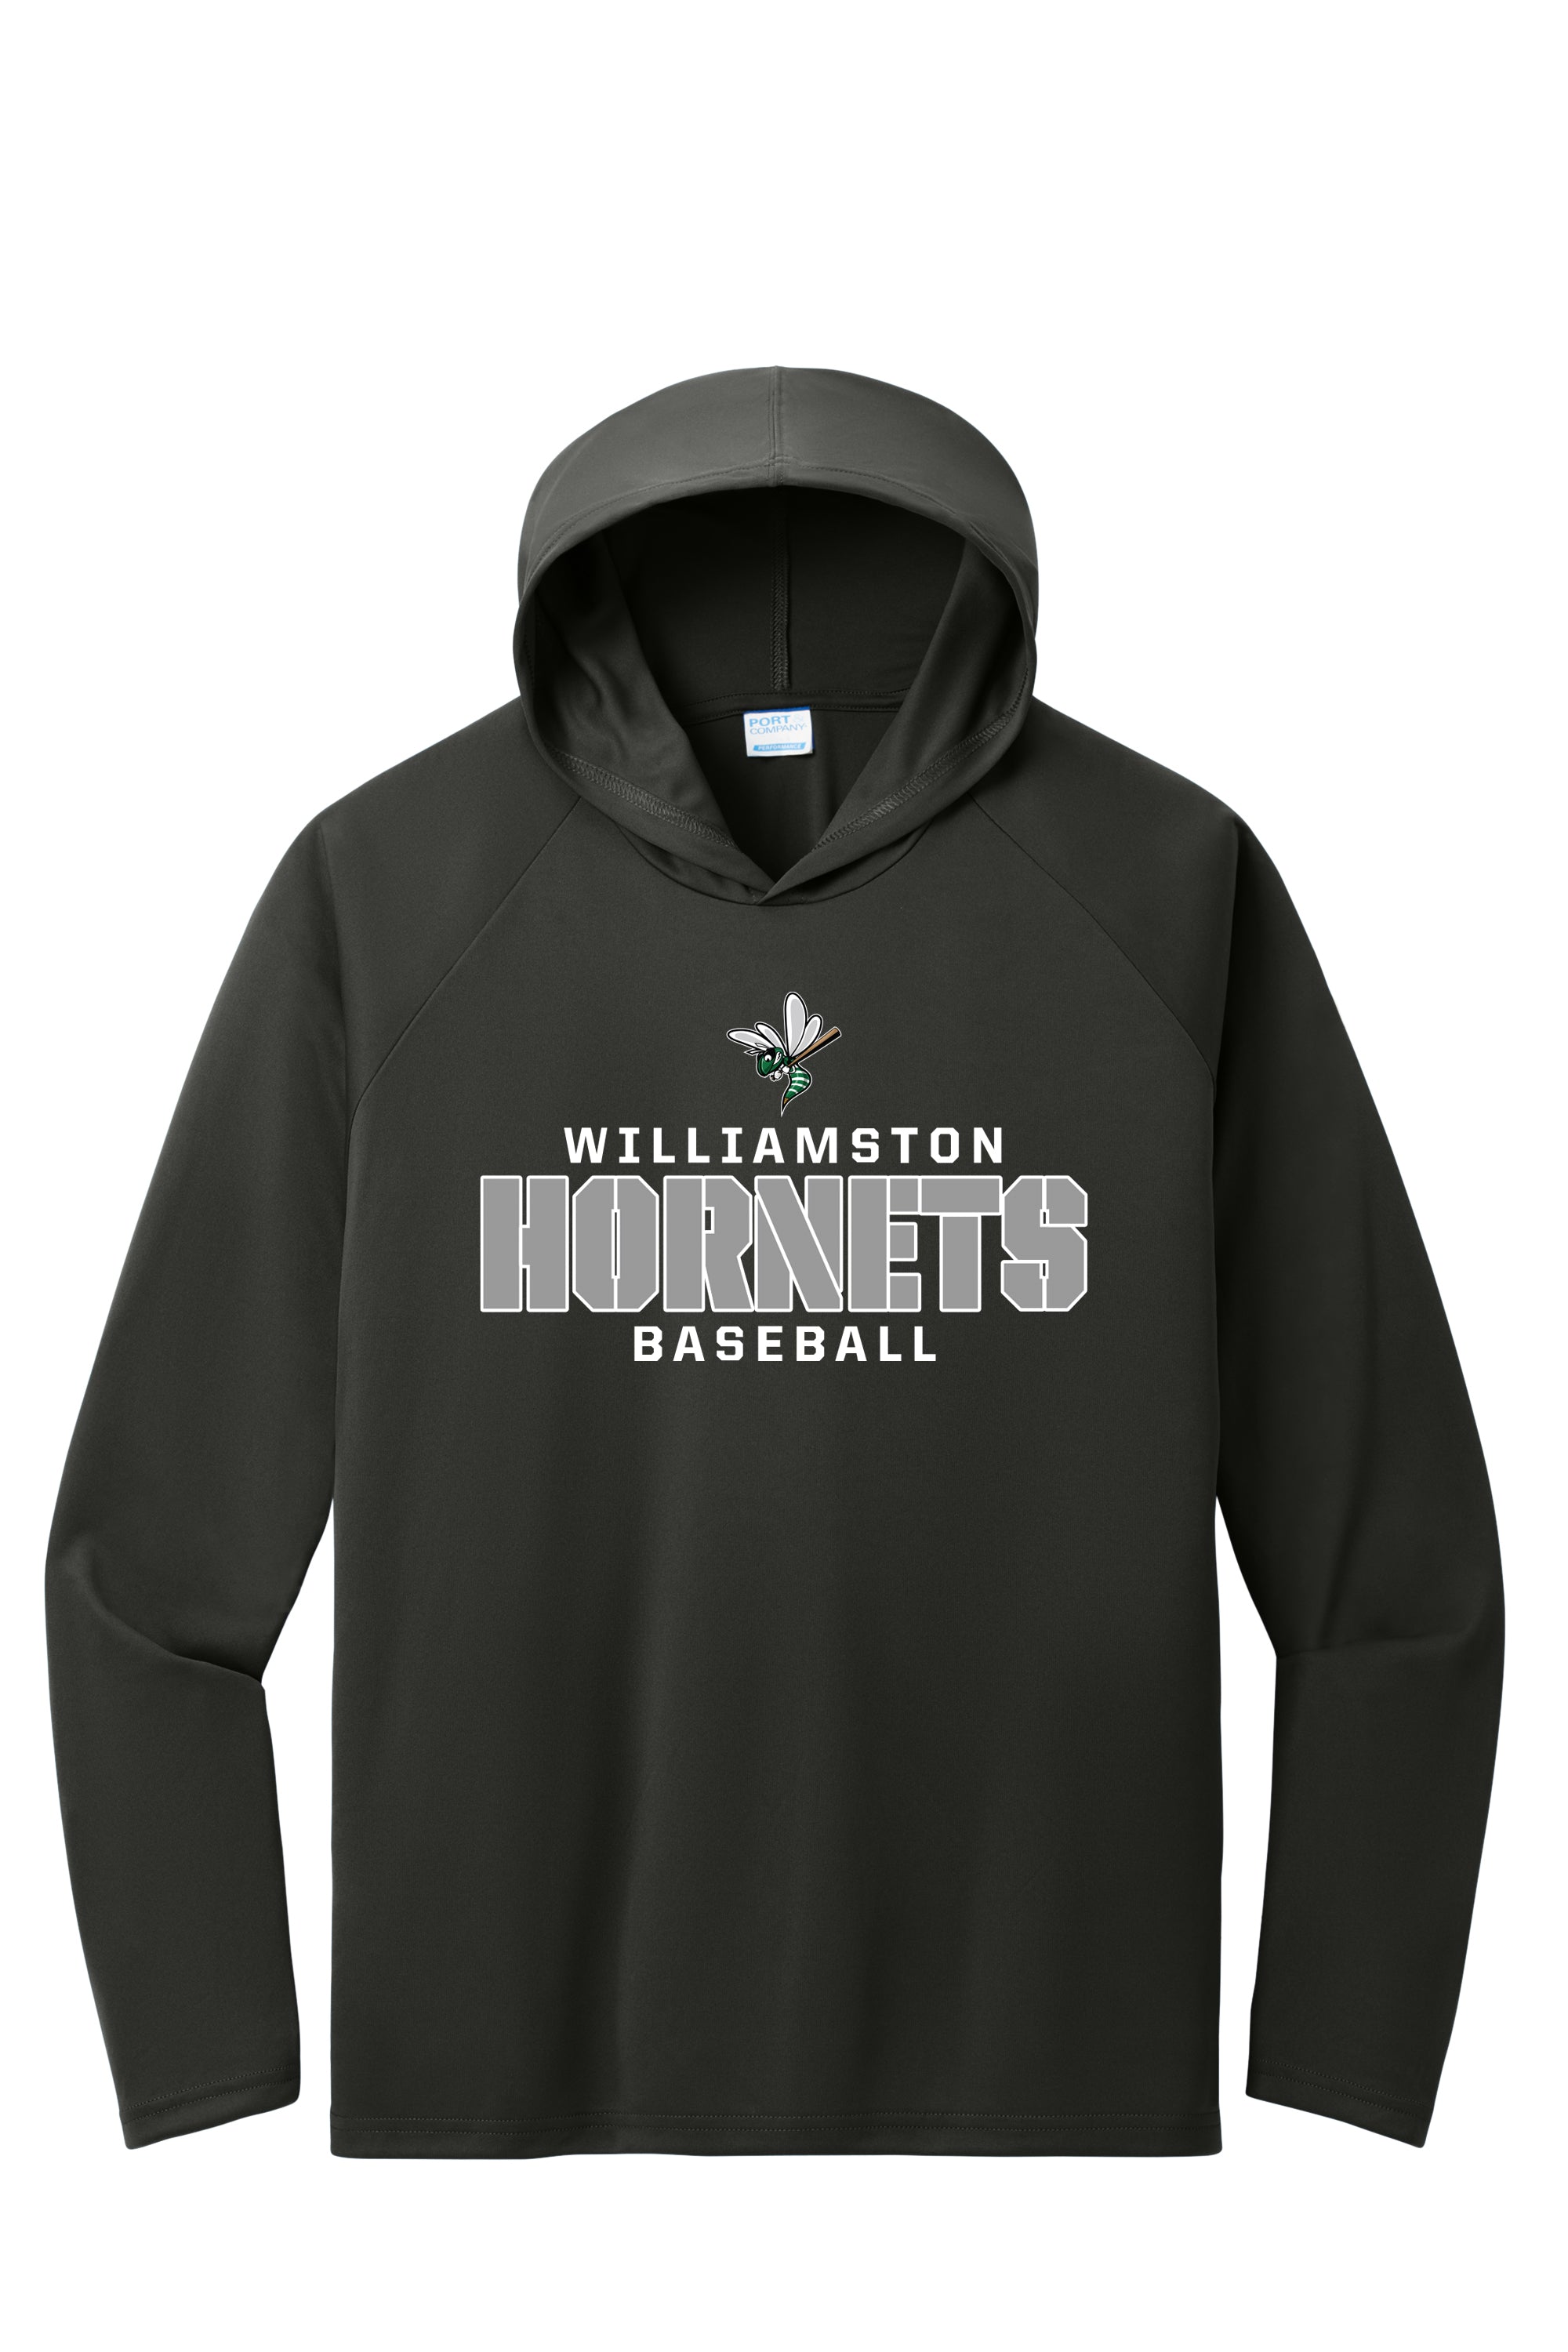 Williamston Baseball - Pullover Hoodie